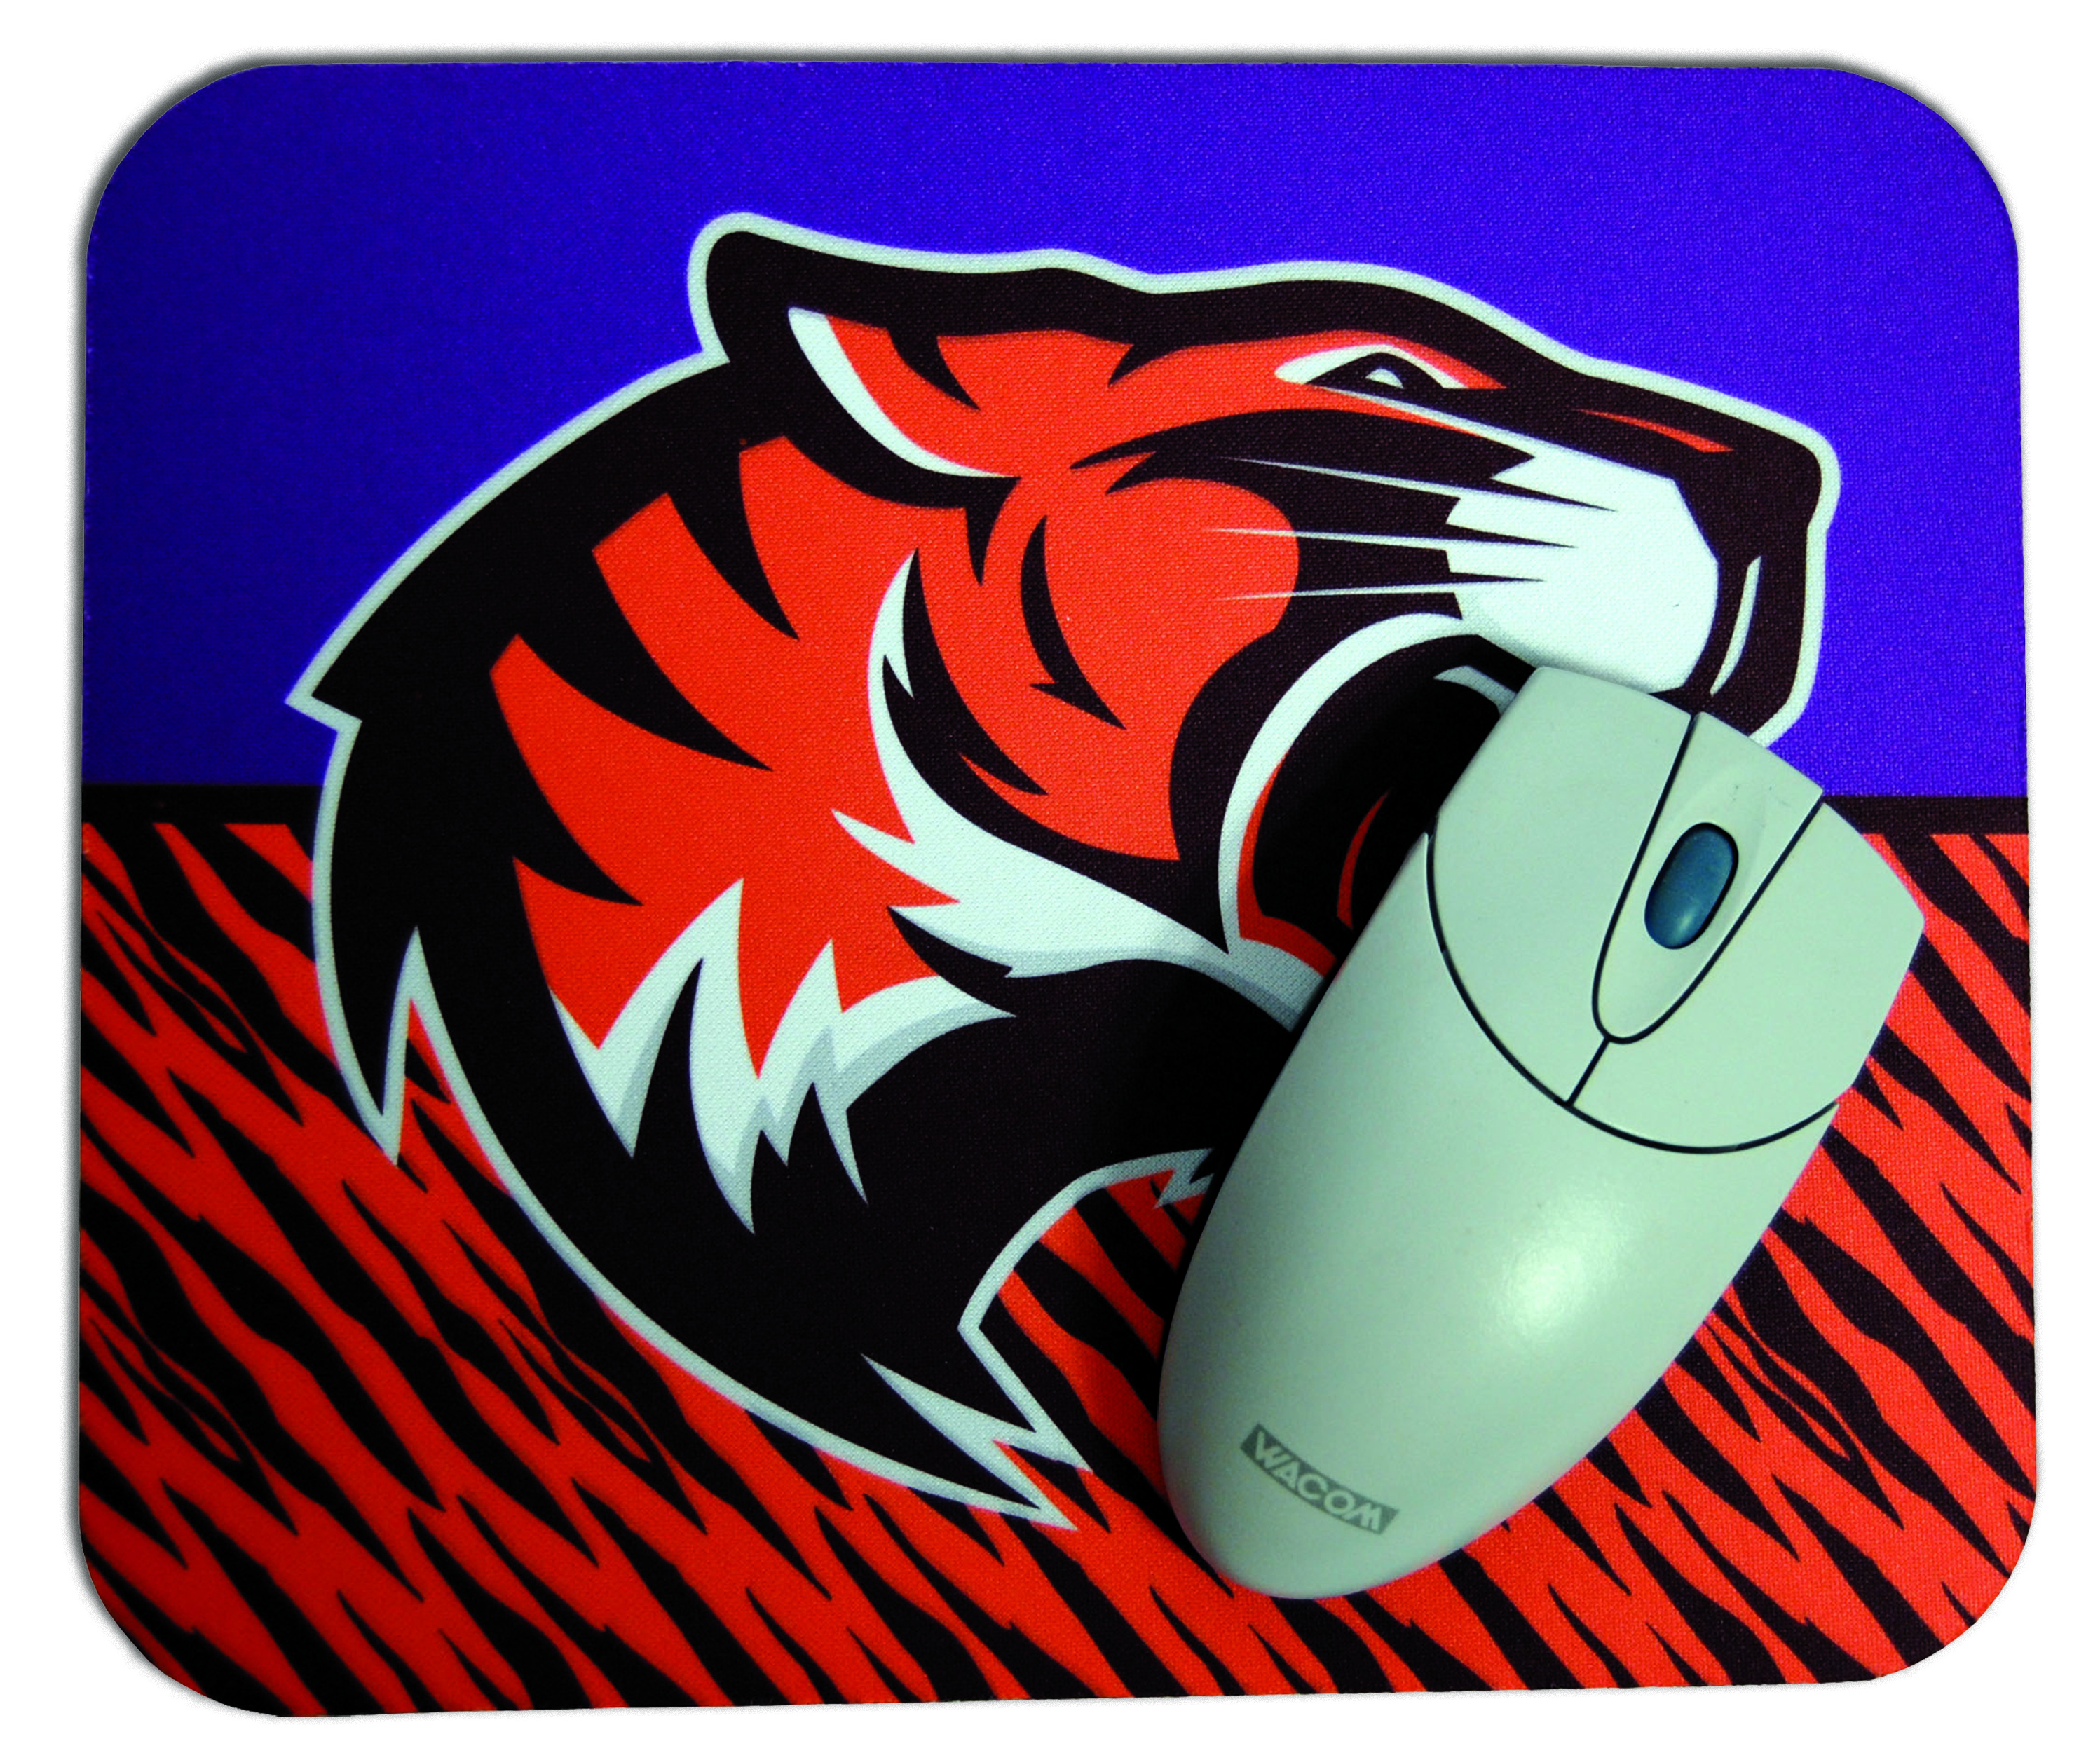 Custom Personalized Rubber Mouse Pad Uruguay Futbol Liga Soccer